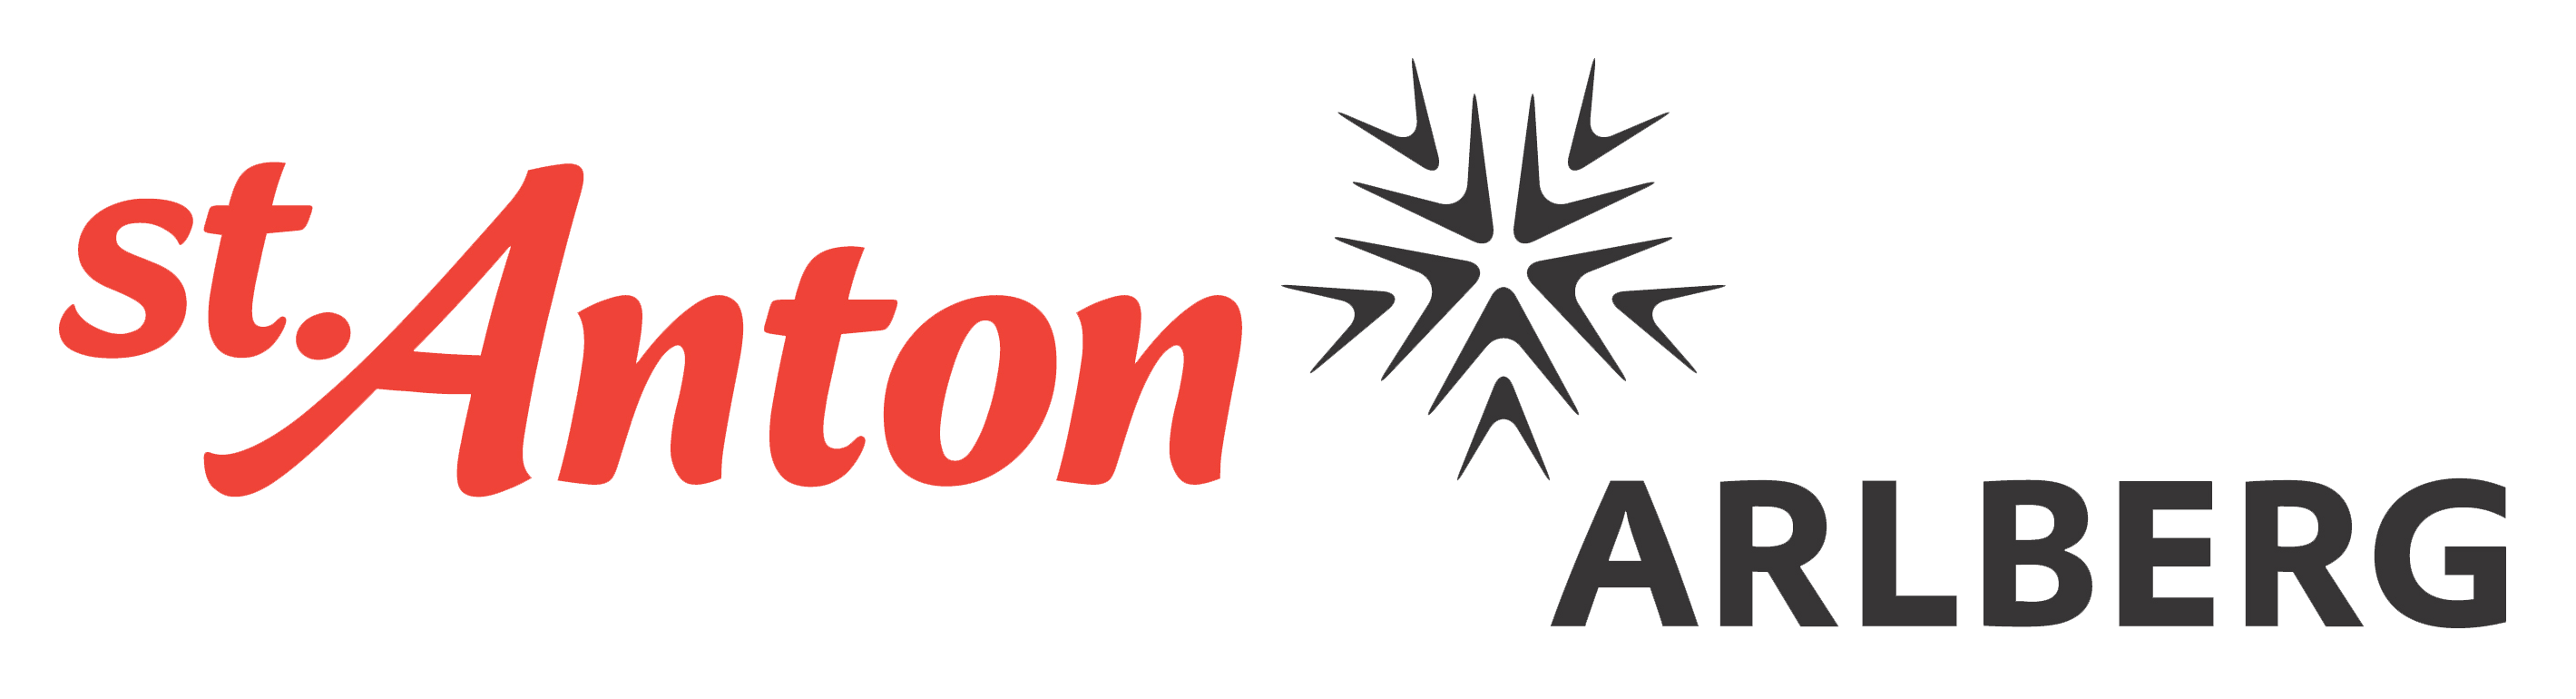 Logo St. Anton am Arlberg